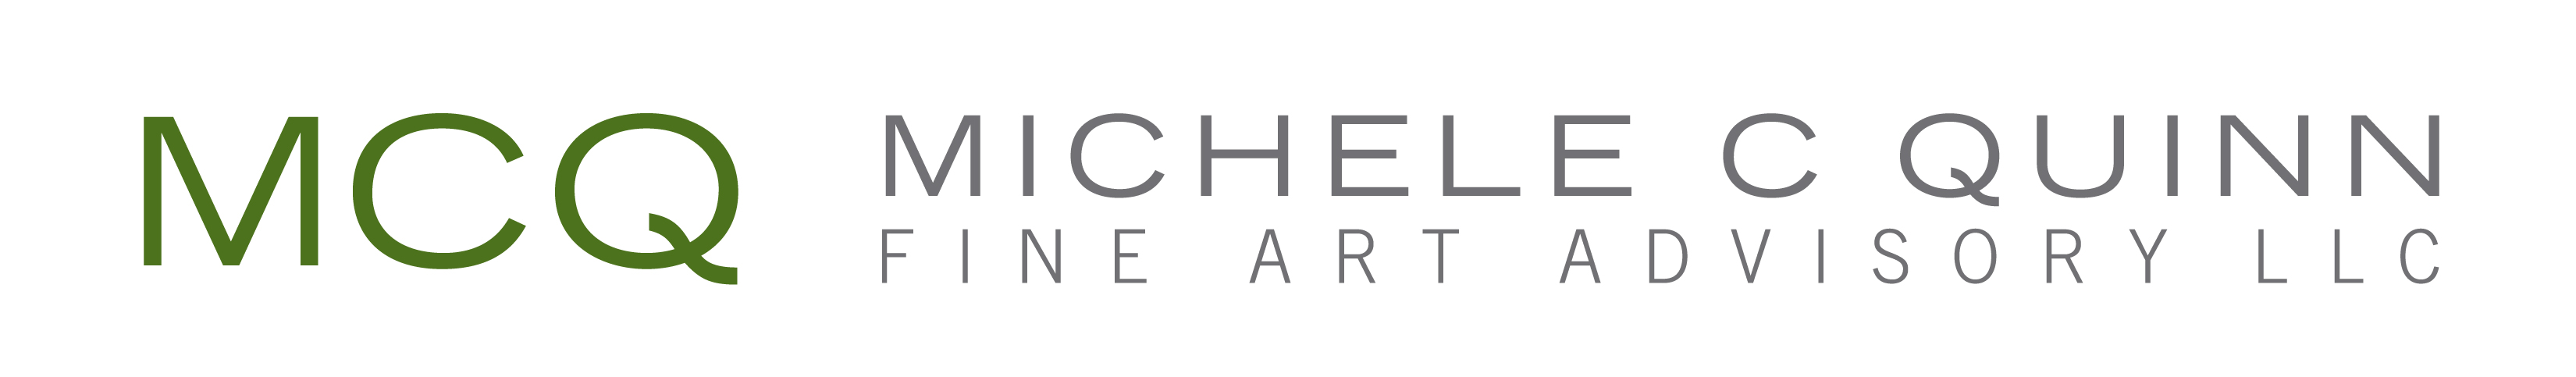 Michele C Quinn Fine Art Advisory, LLC